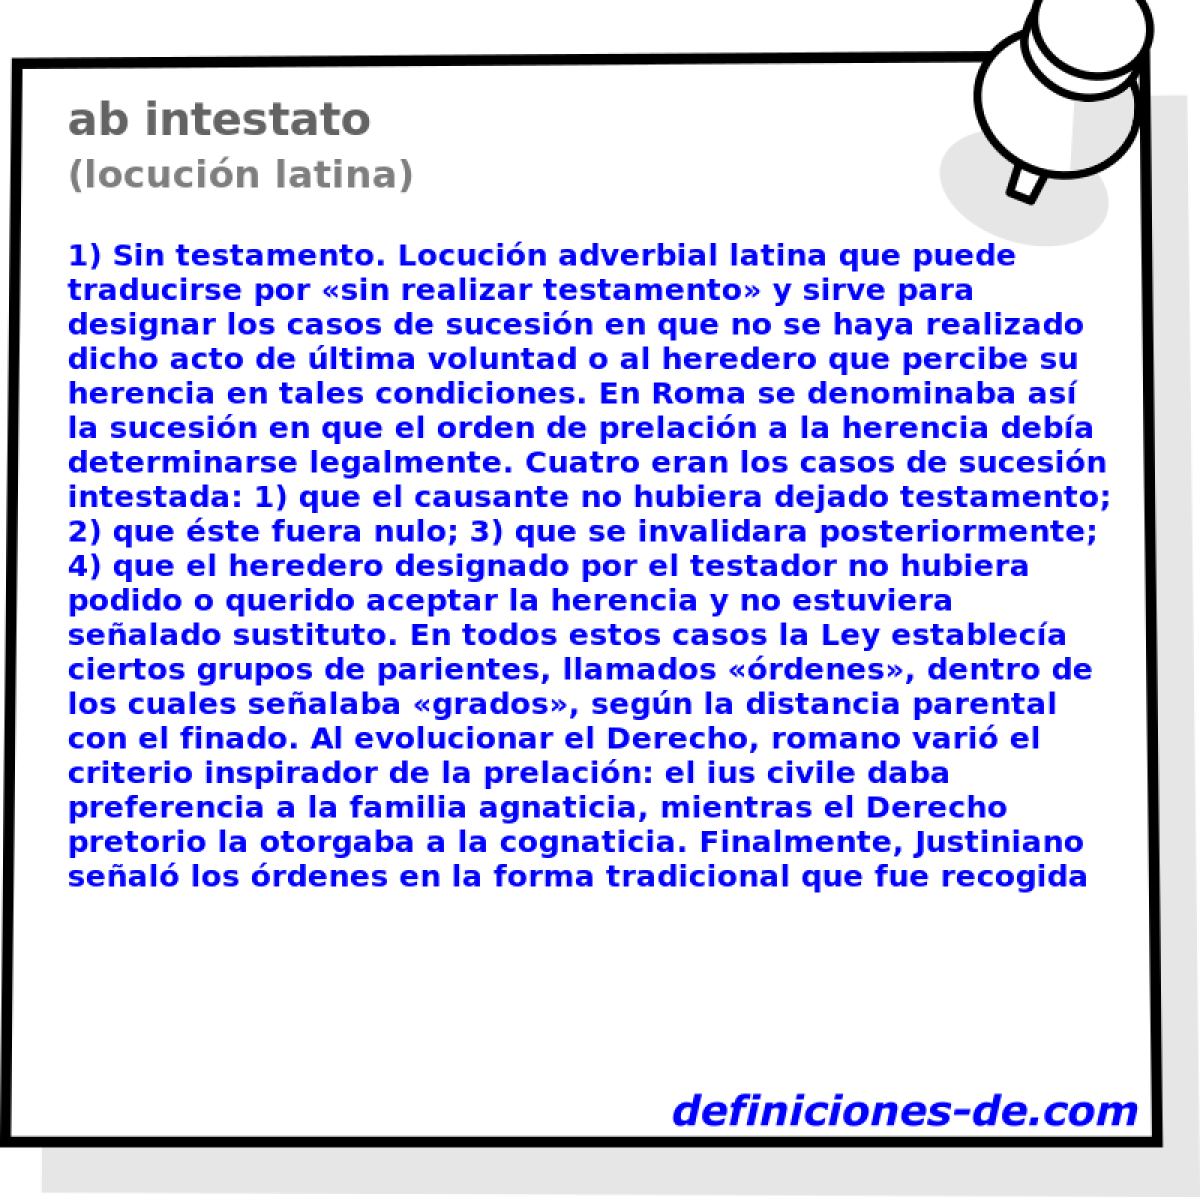 ab intestato (locucin latina)